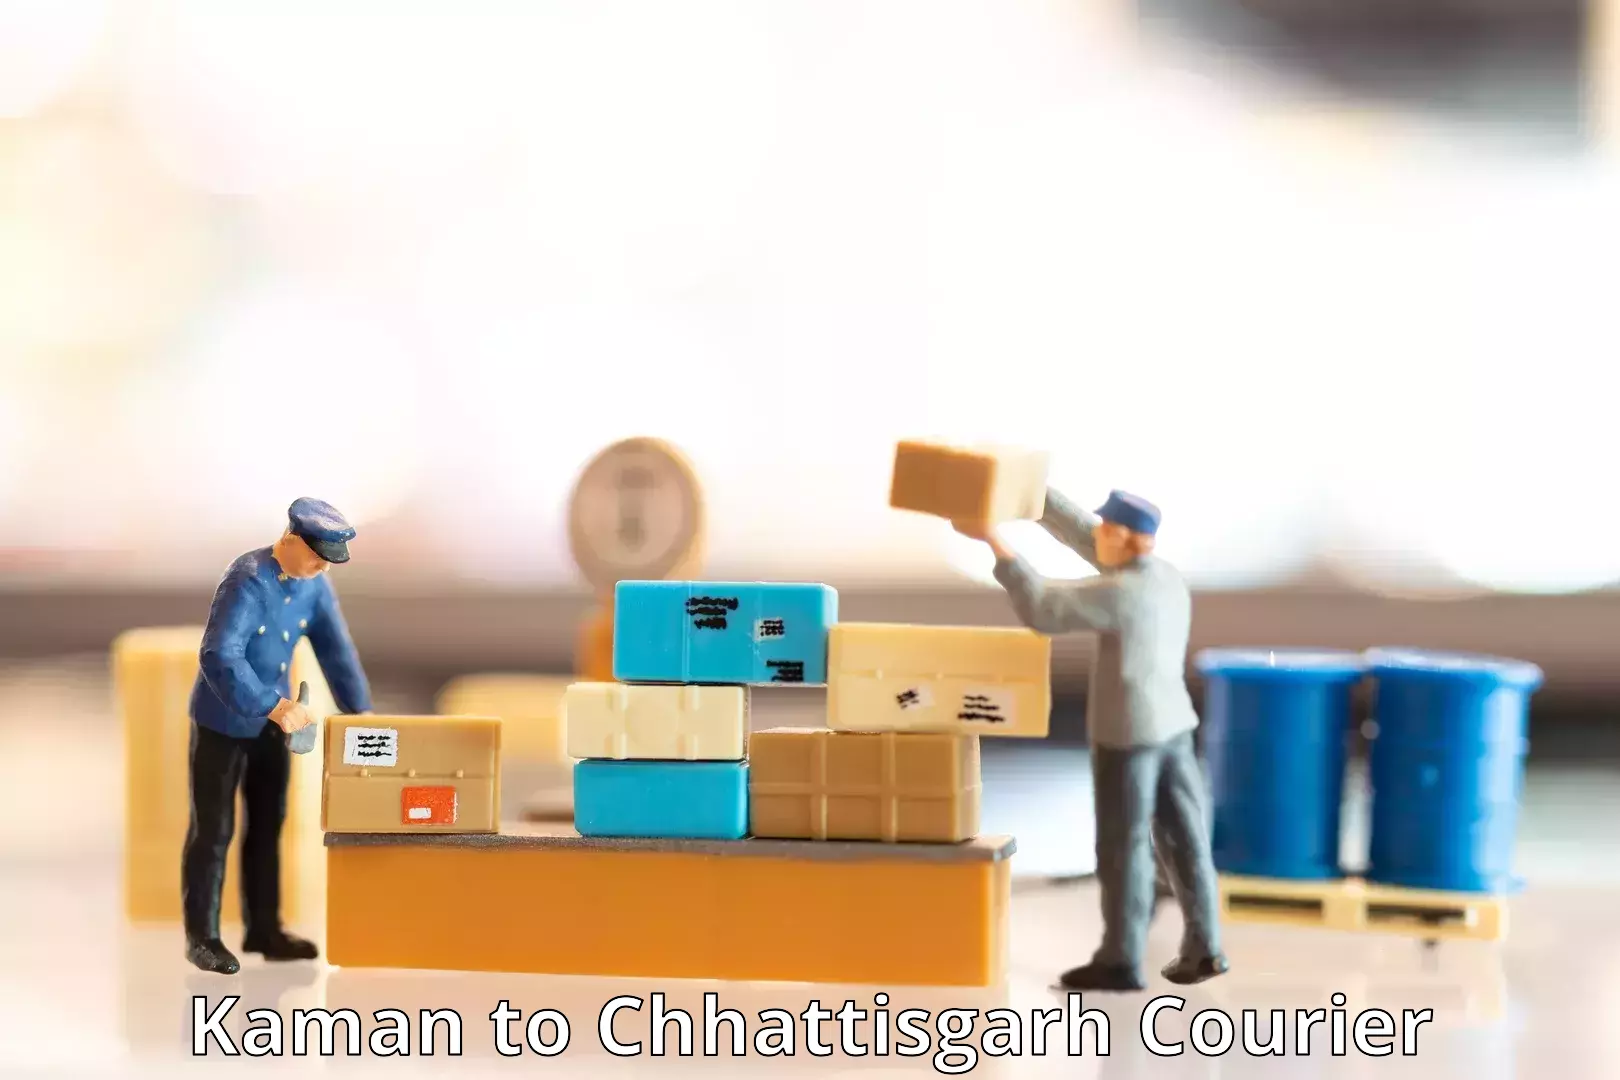 Large package courier Kaman to Korea Chhattisgarh